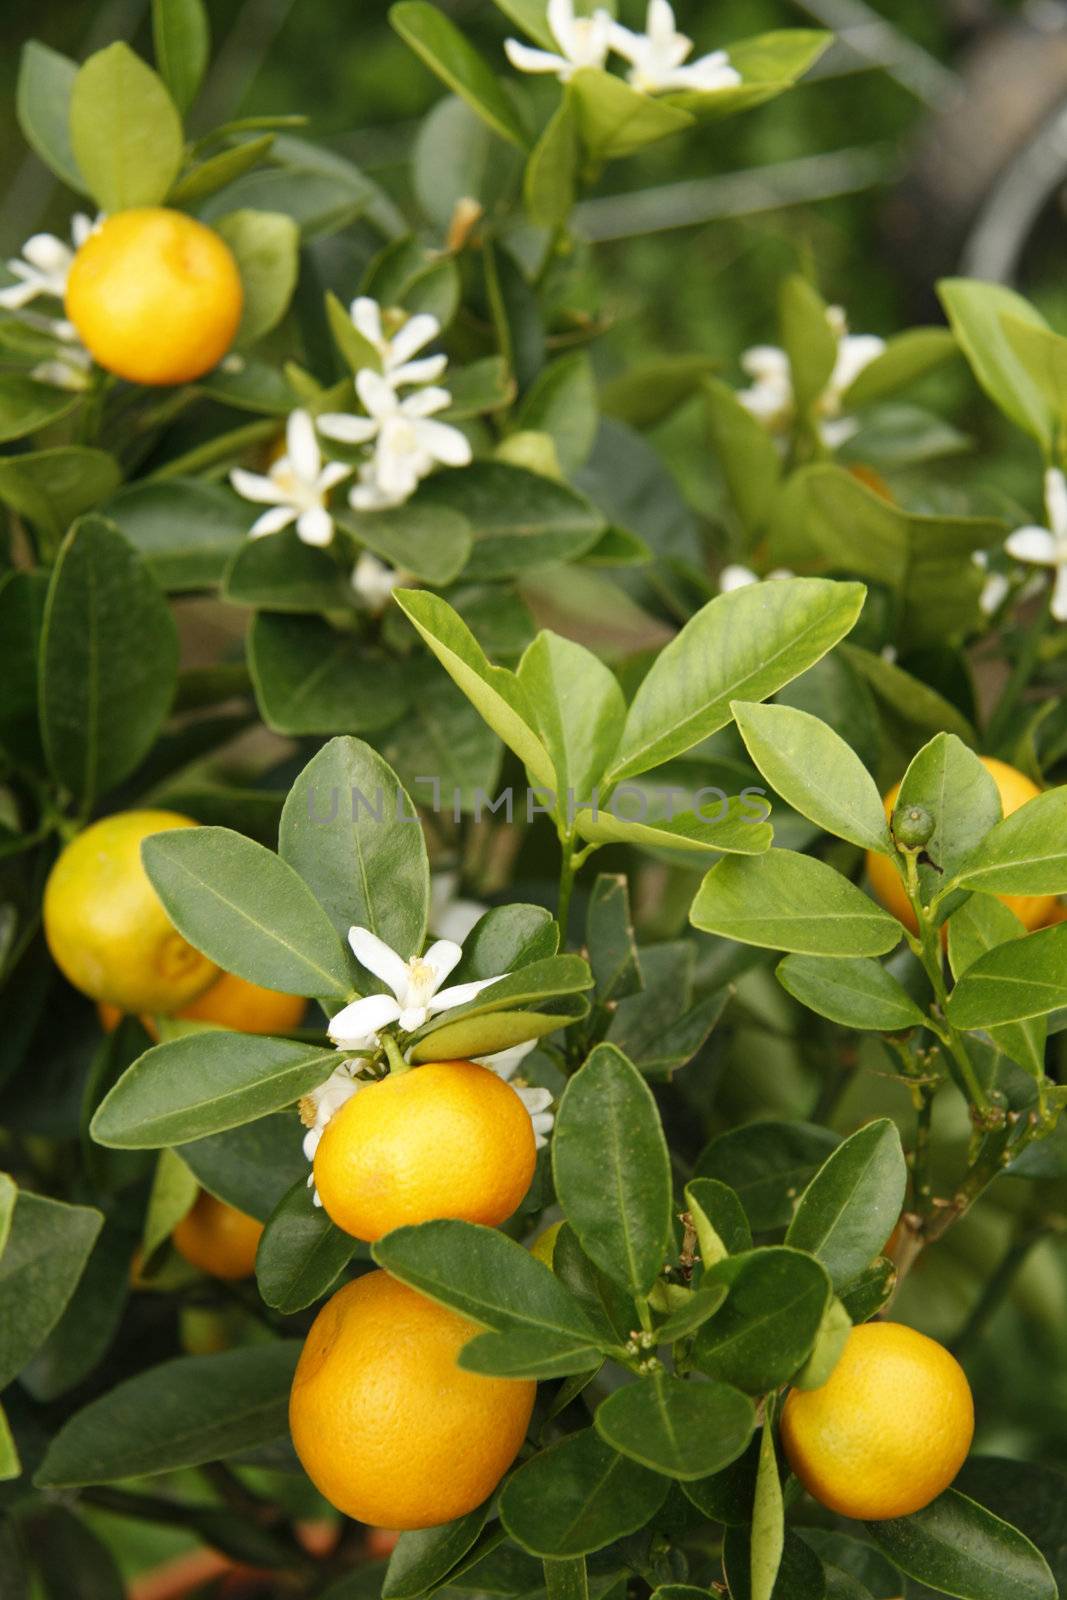 Blooming and fructiferous tangerine tree - outdoor shot